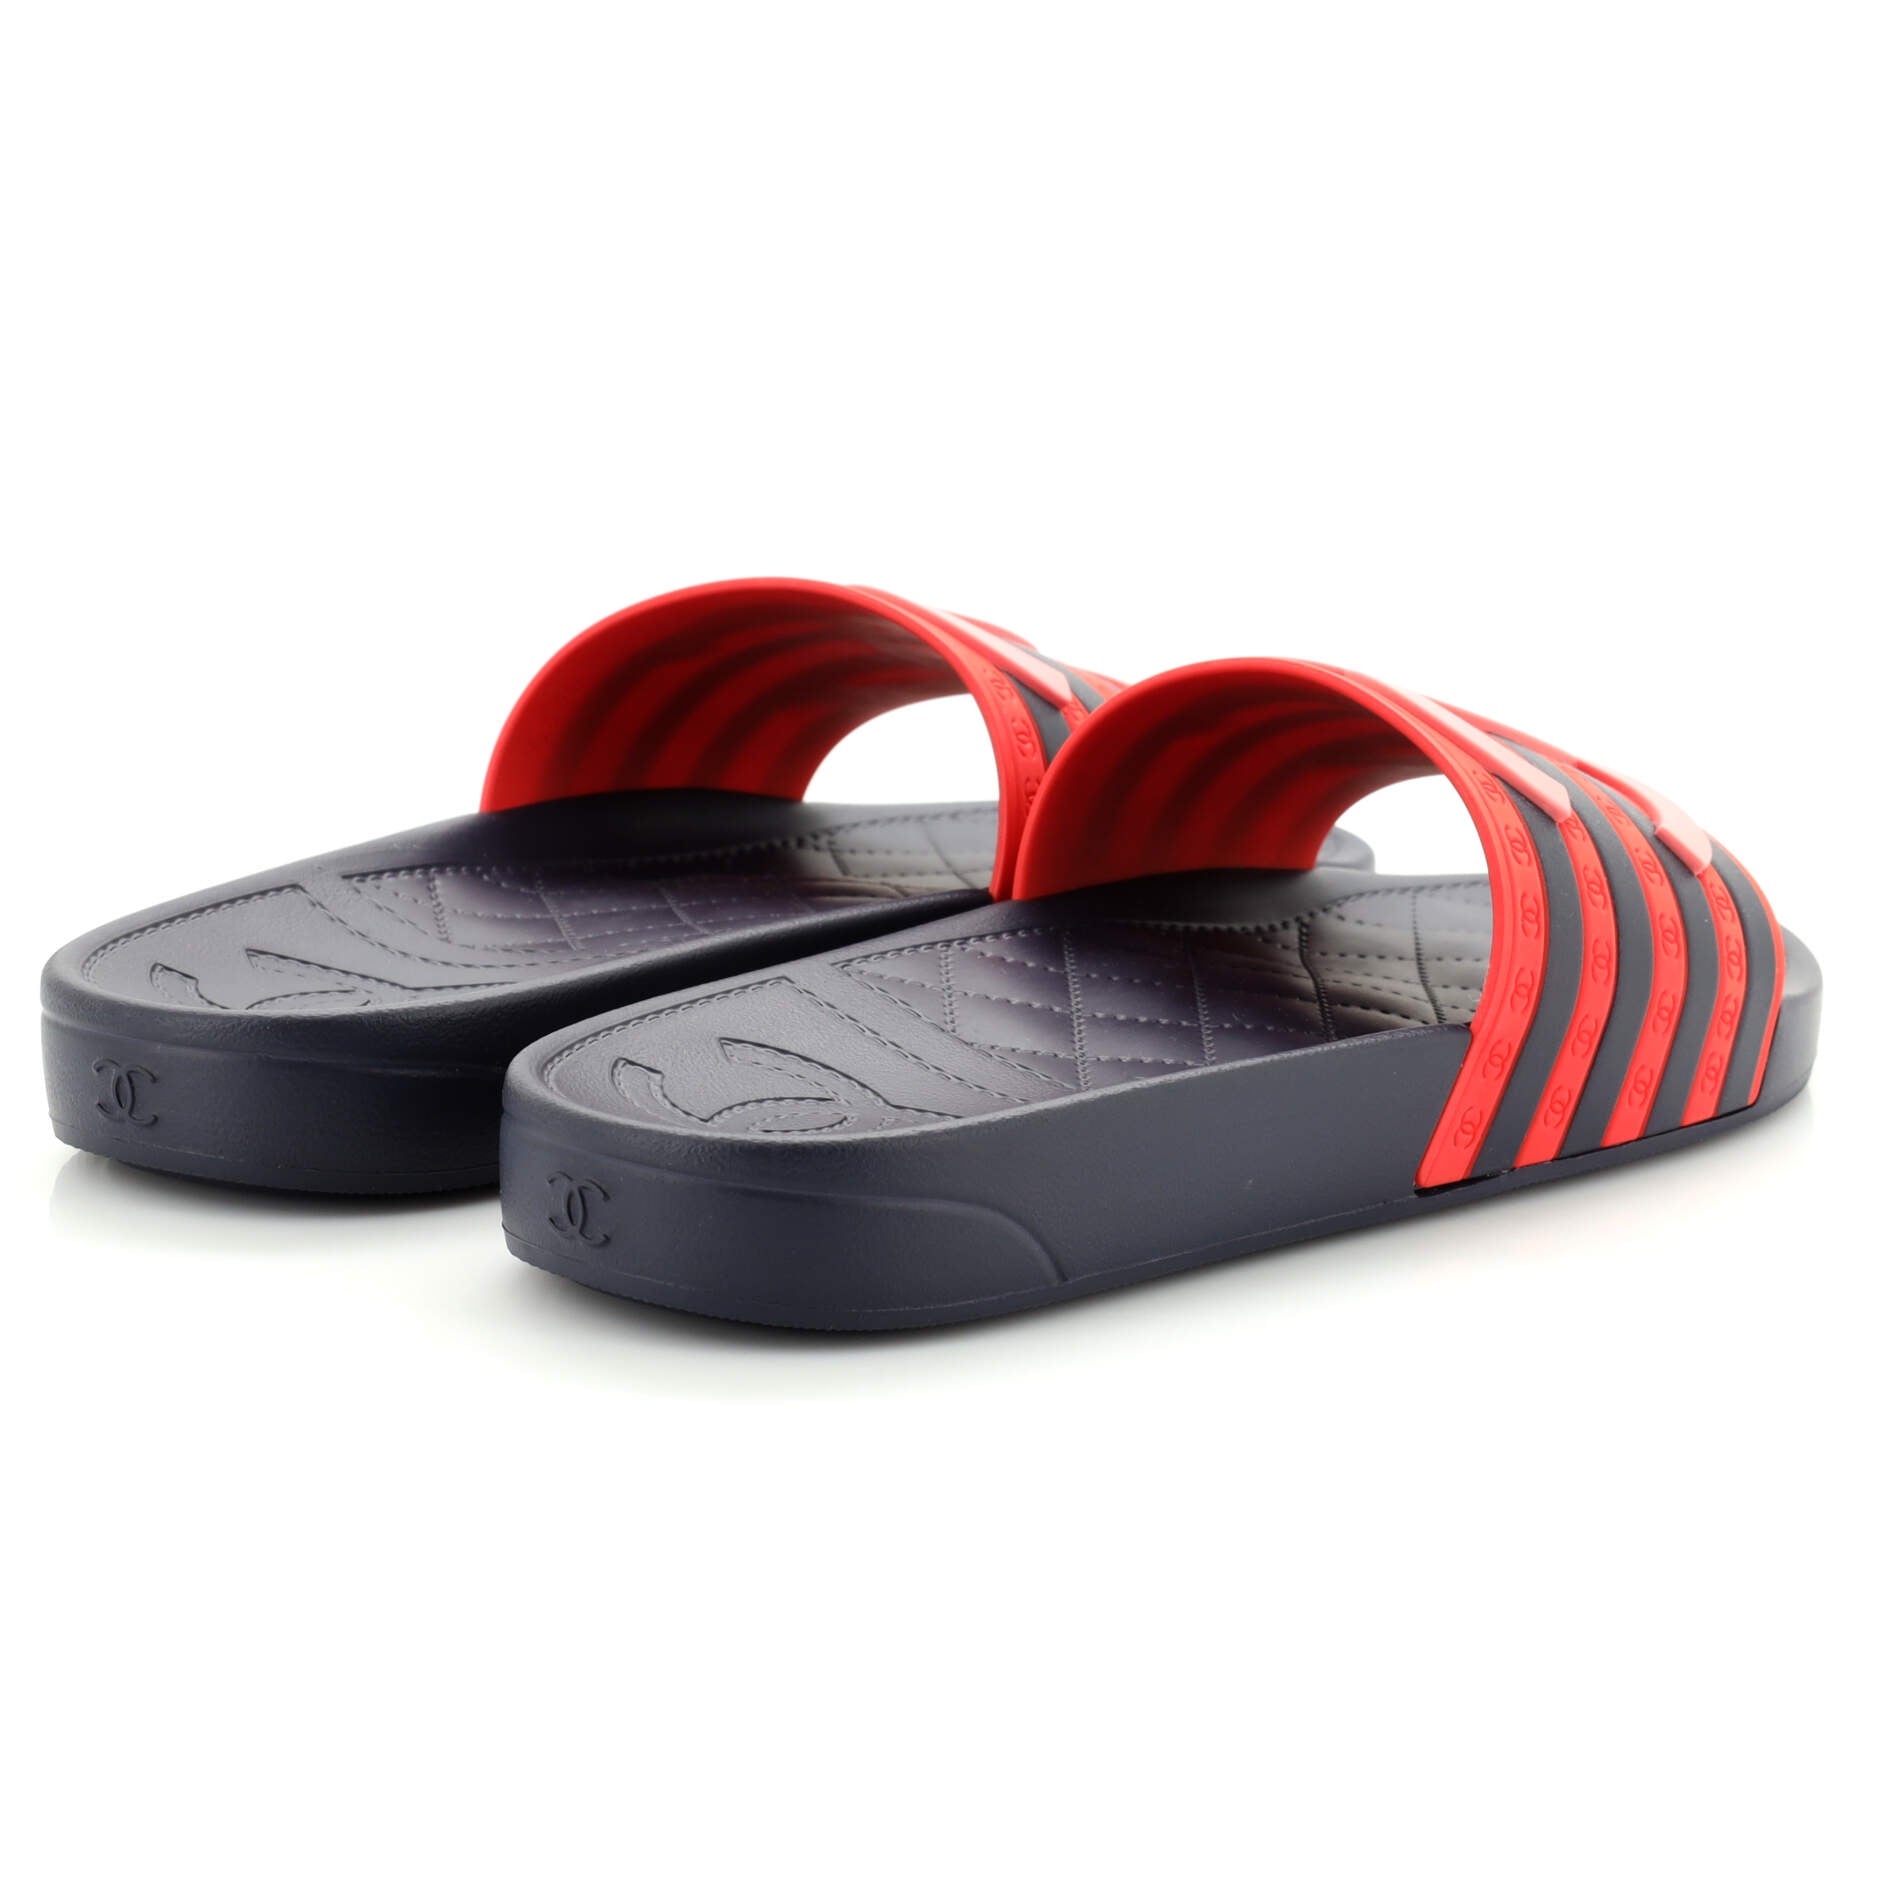 CHANEL Rubber CC Flat Sandals 36 Pale Pink 487470